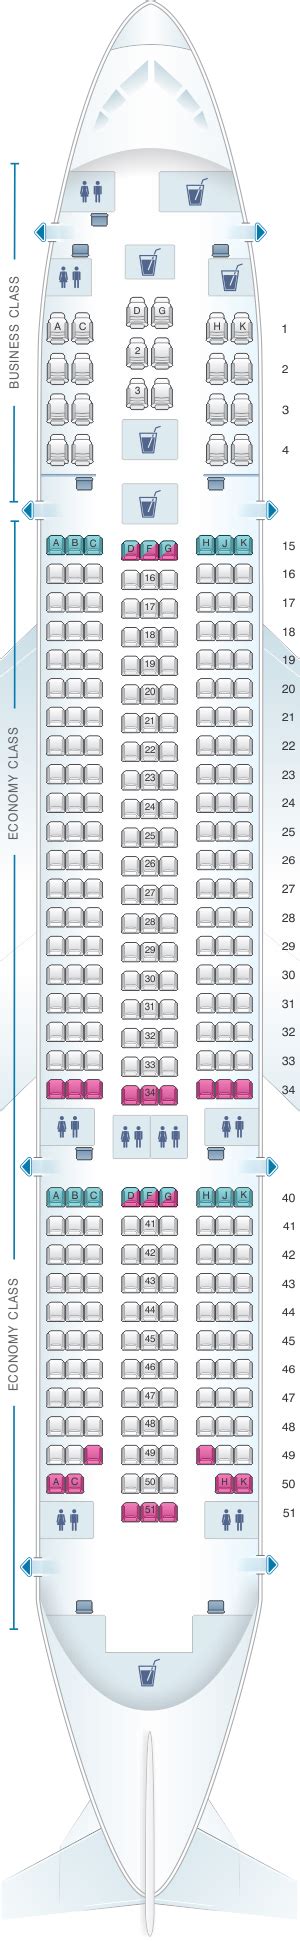 37 Seat Map 787 Air Europa